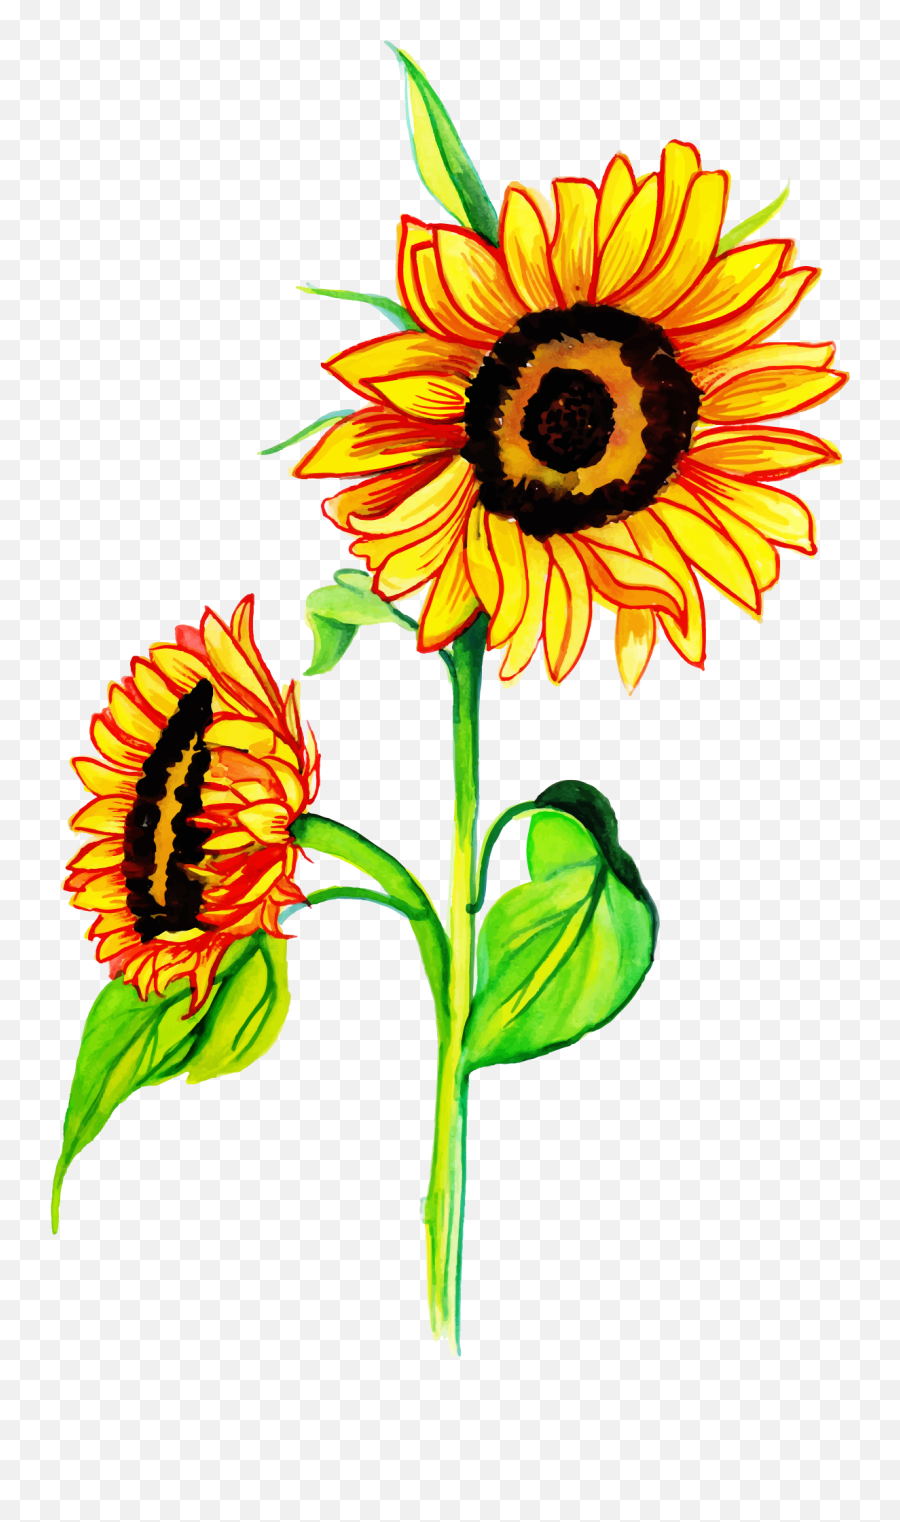 Free Png Watercolor Floral - Konfest,Watercolor Sunflower Png